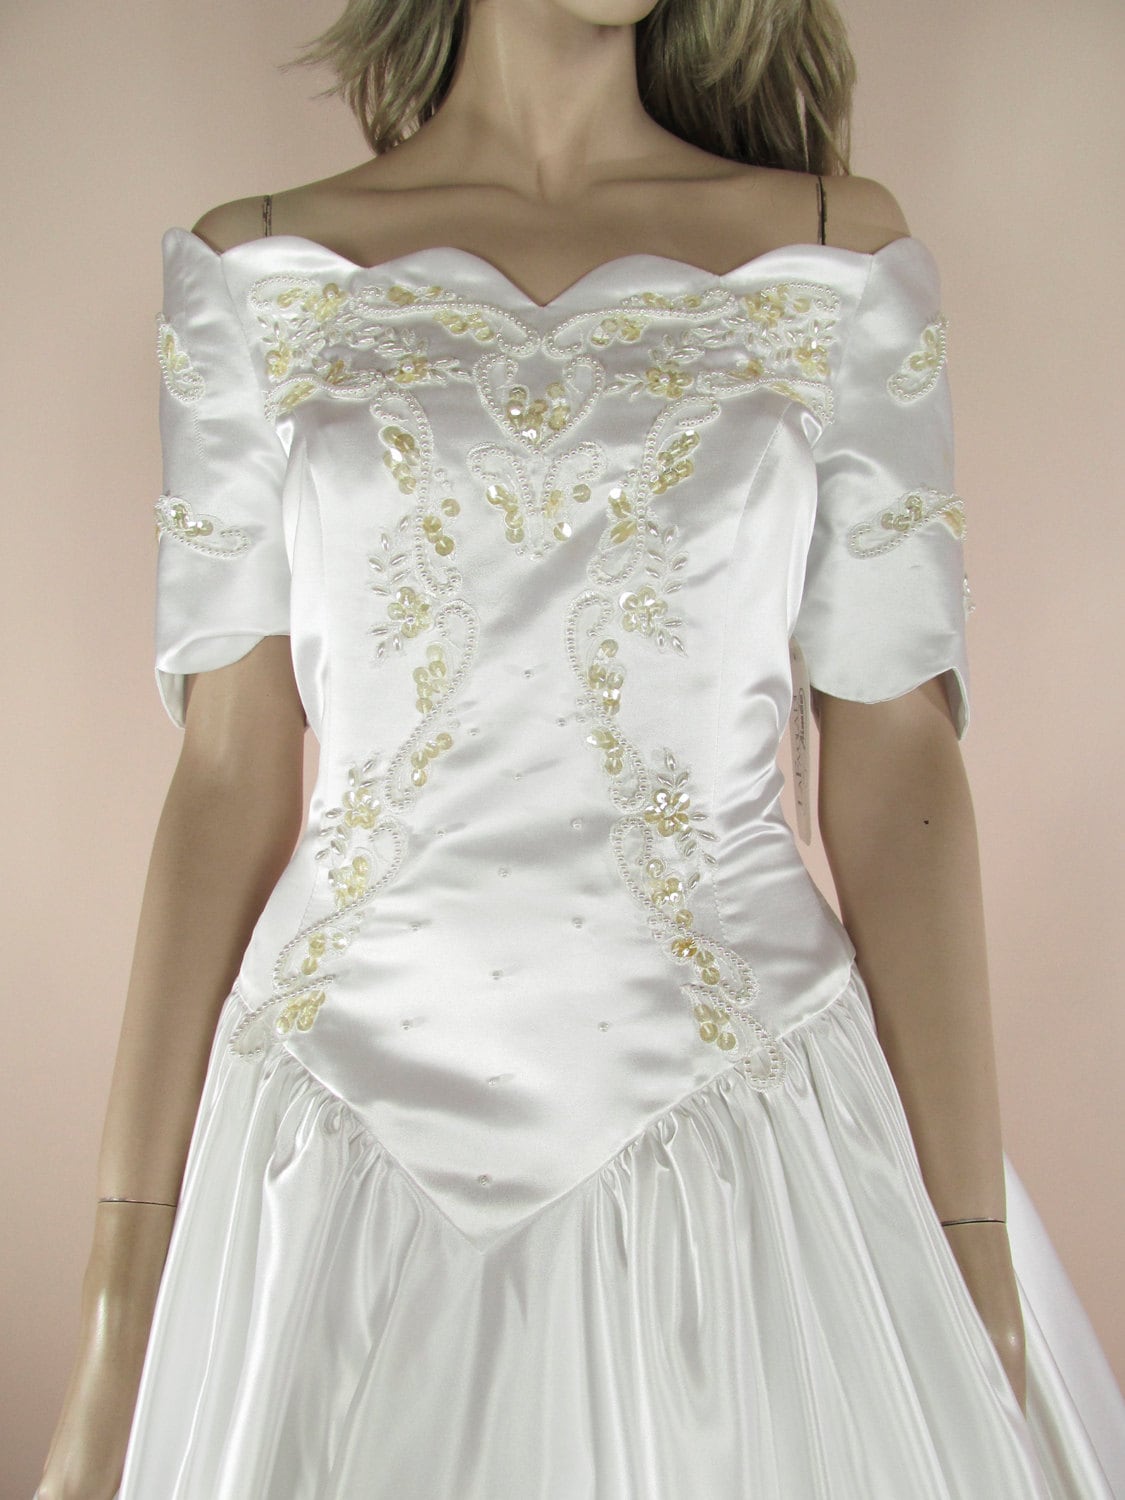 White Wedding Dress 80s Ball gown Cinderella style wedding